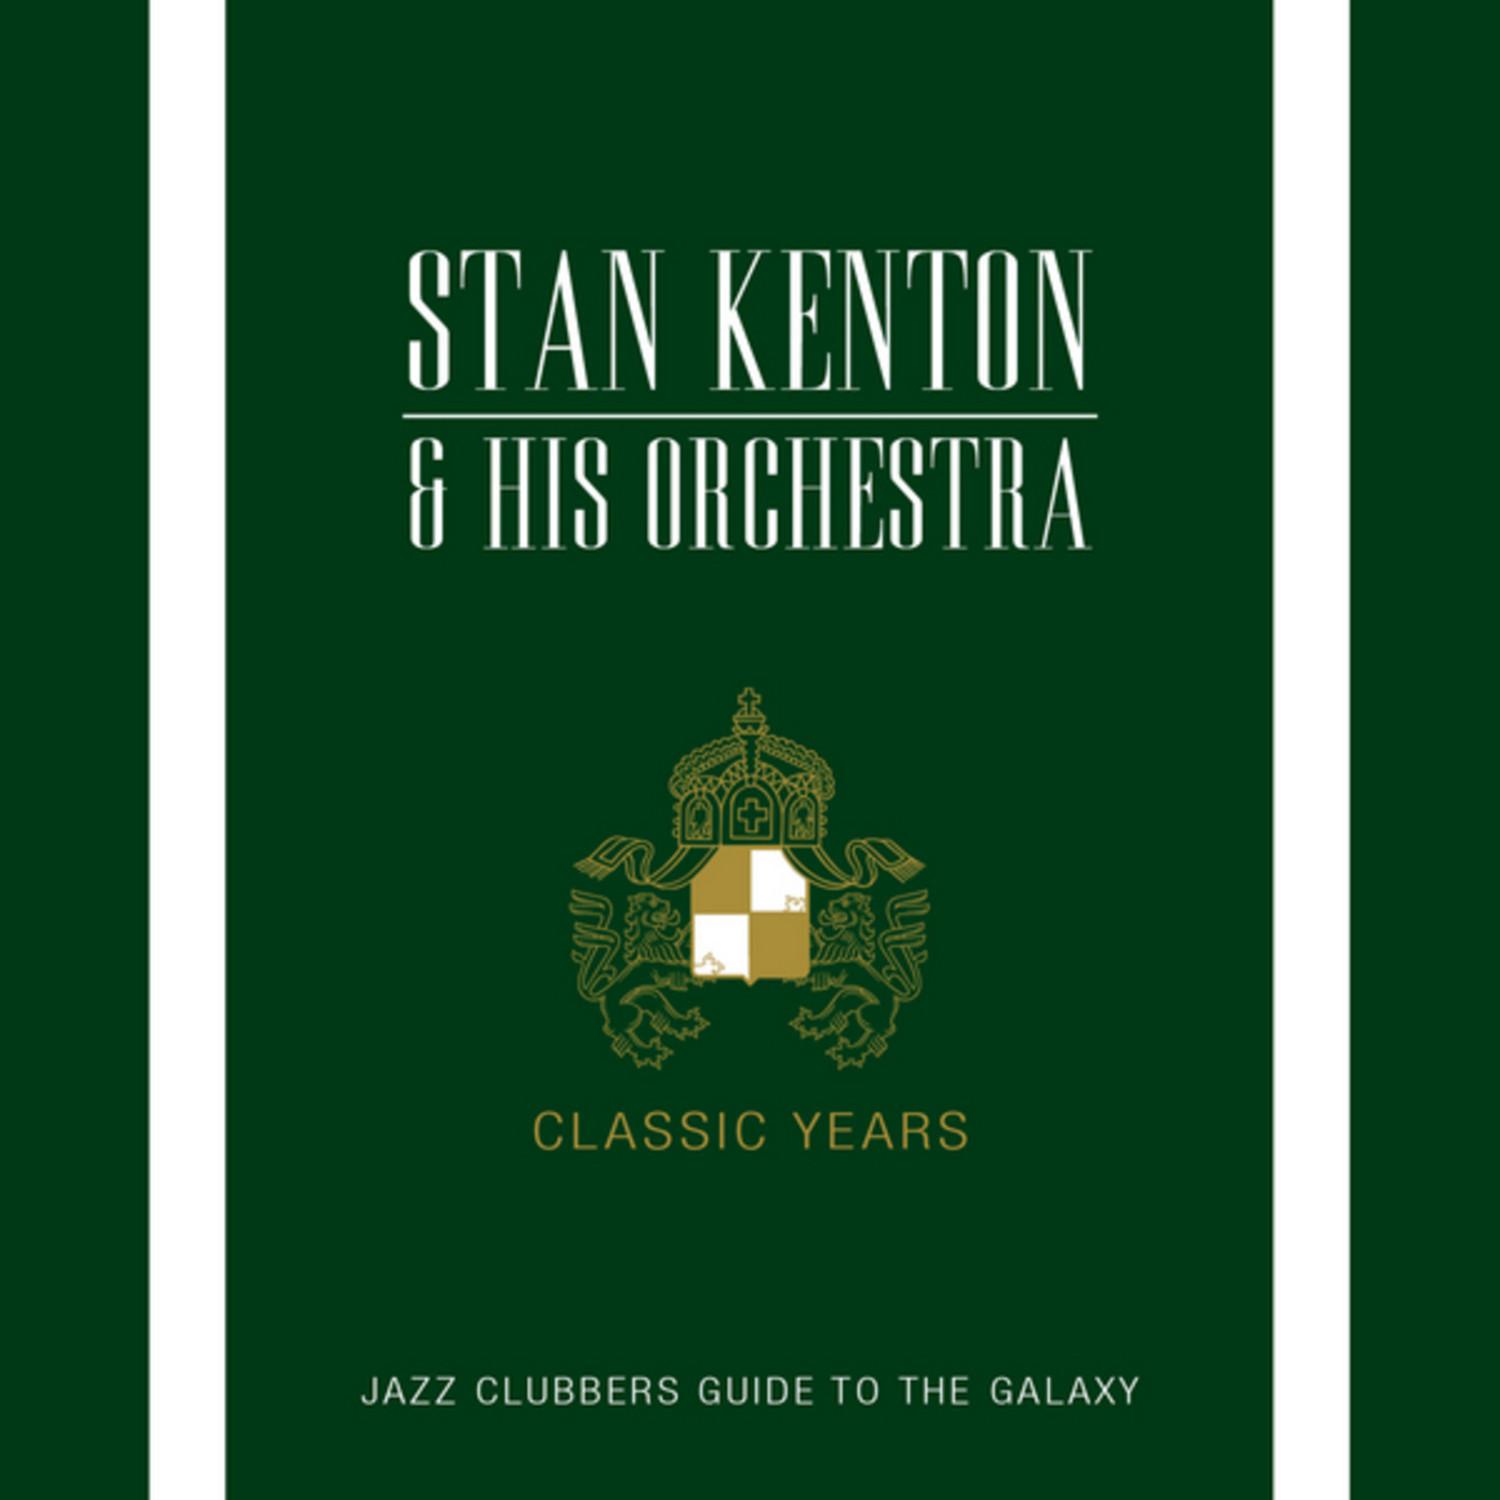 Classic Years of Stan Kenton